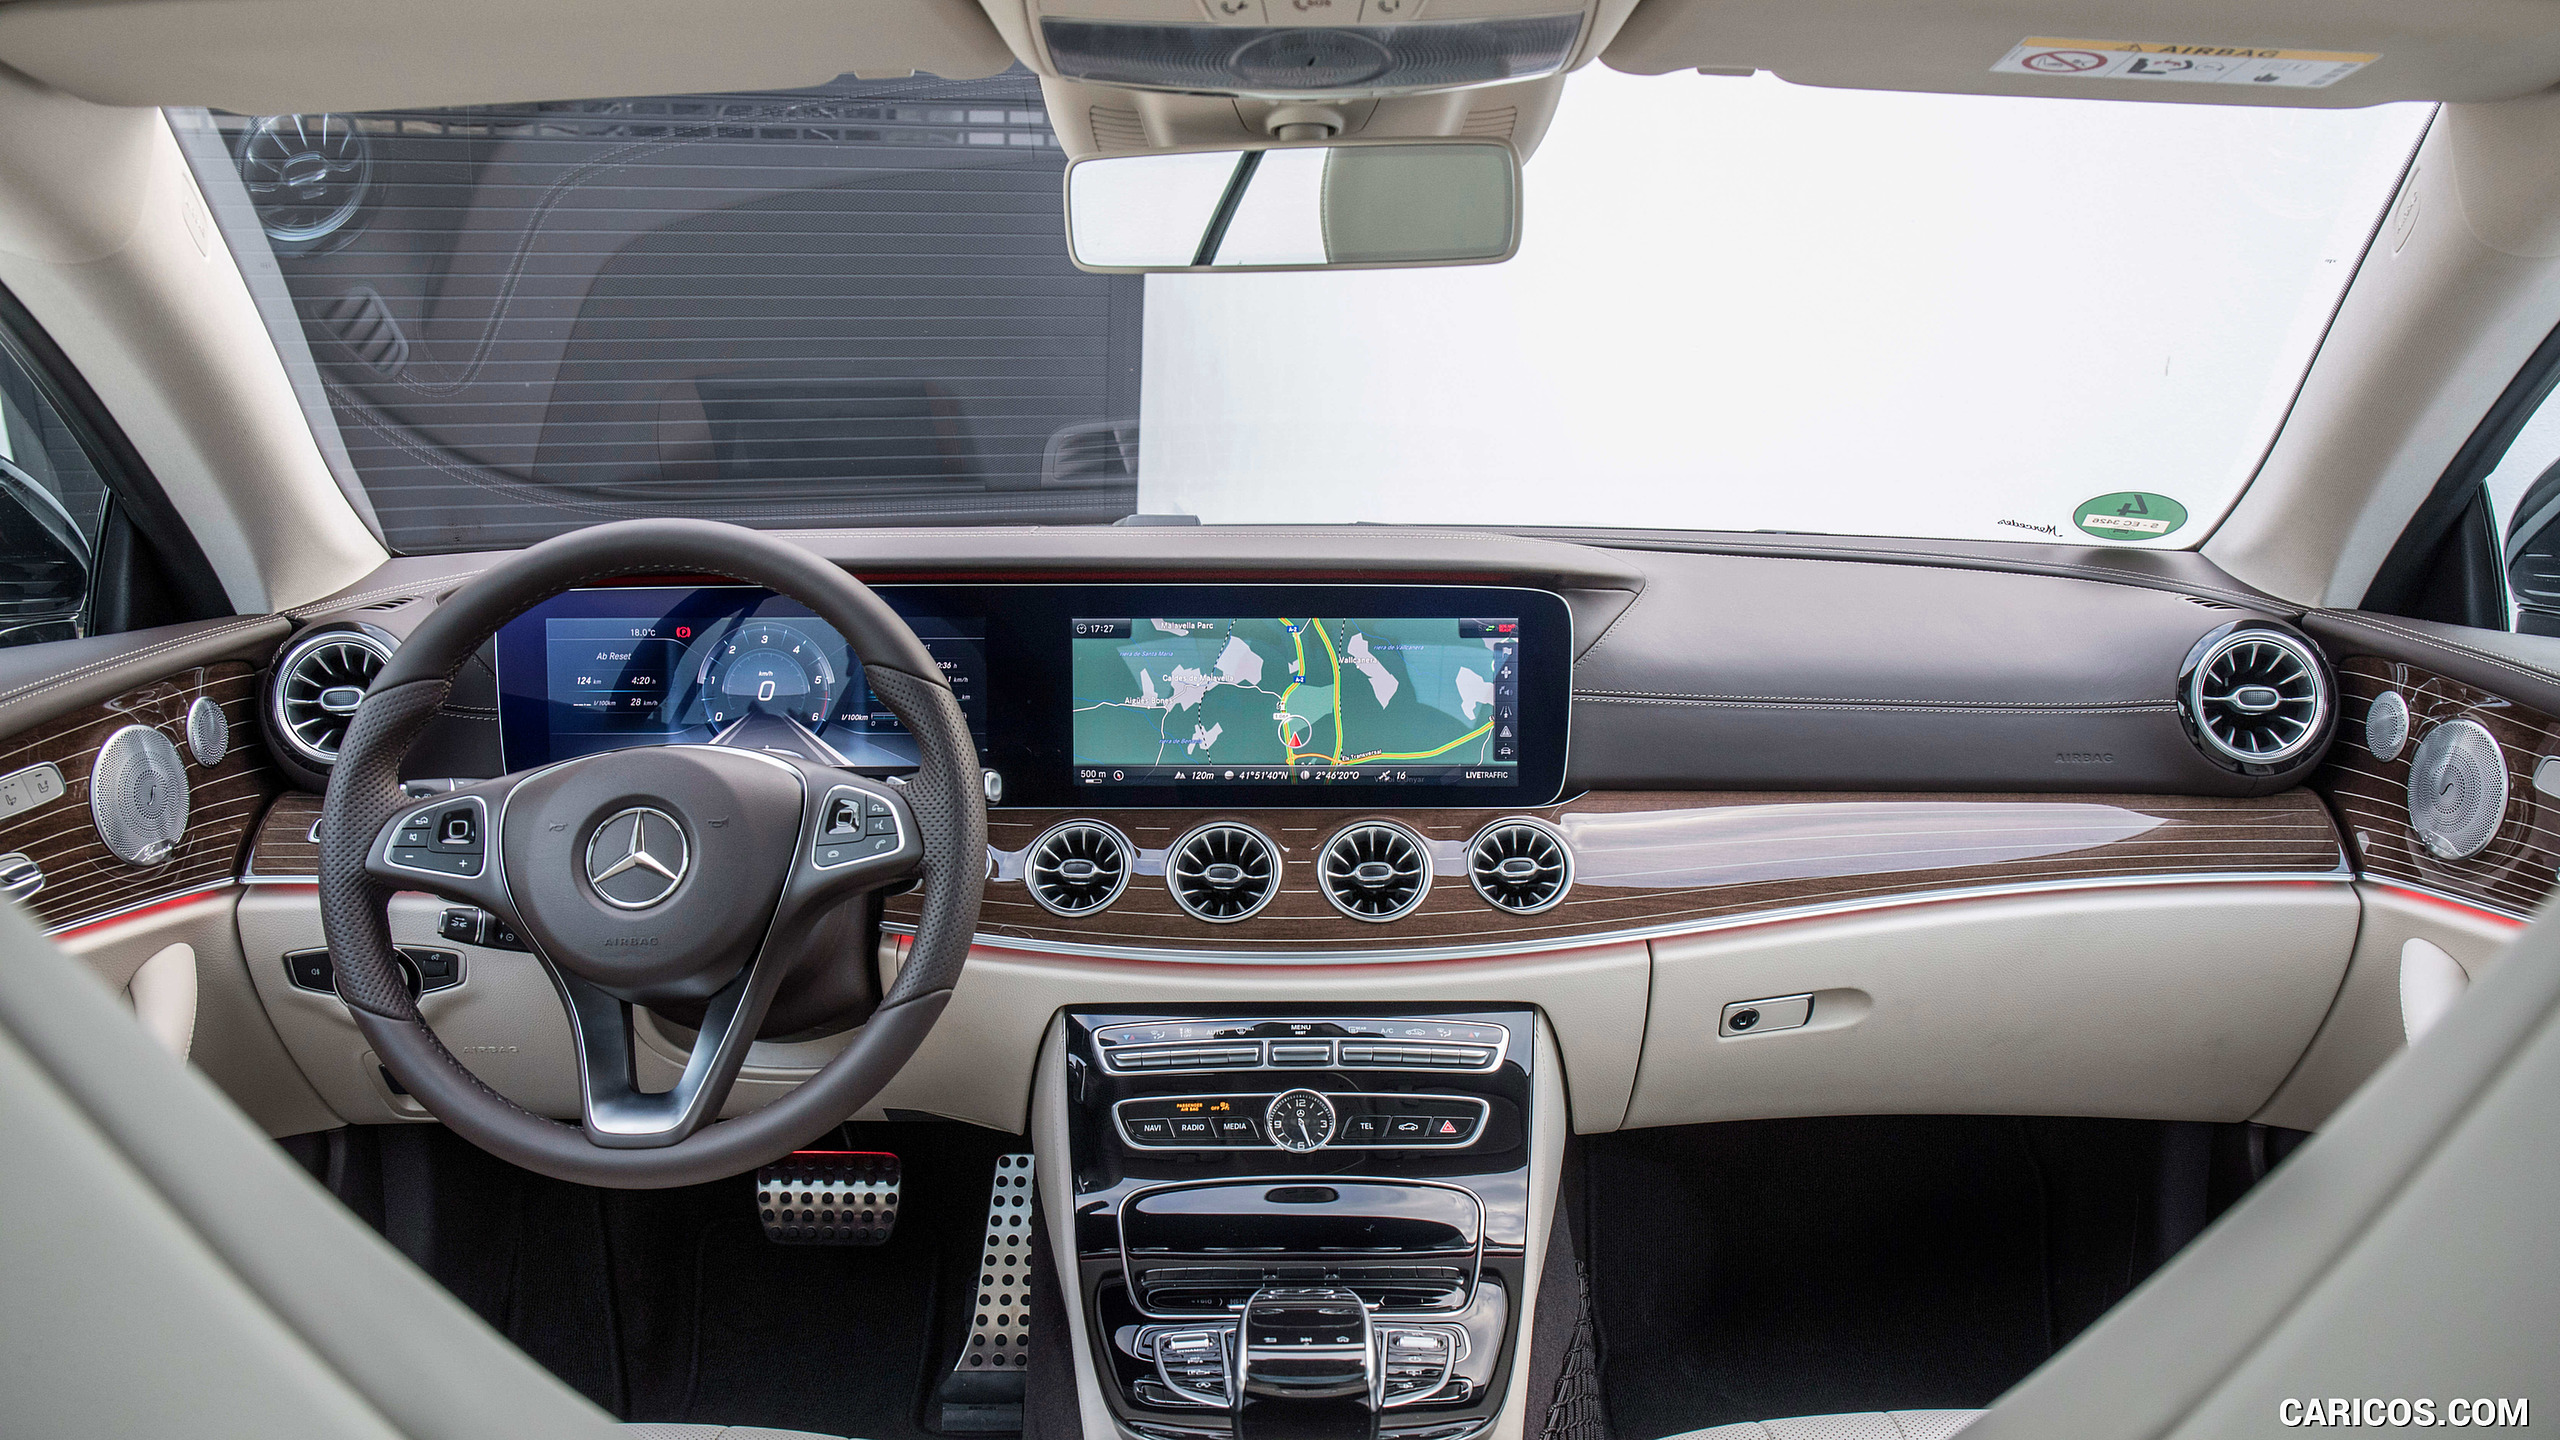 2018 Mercedes-Benz E400 Coupe 4MATIC - Interior, Cockpit, #215 of 365